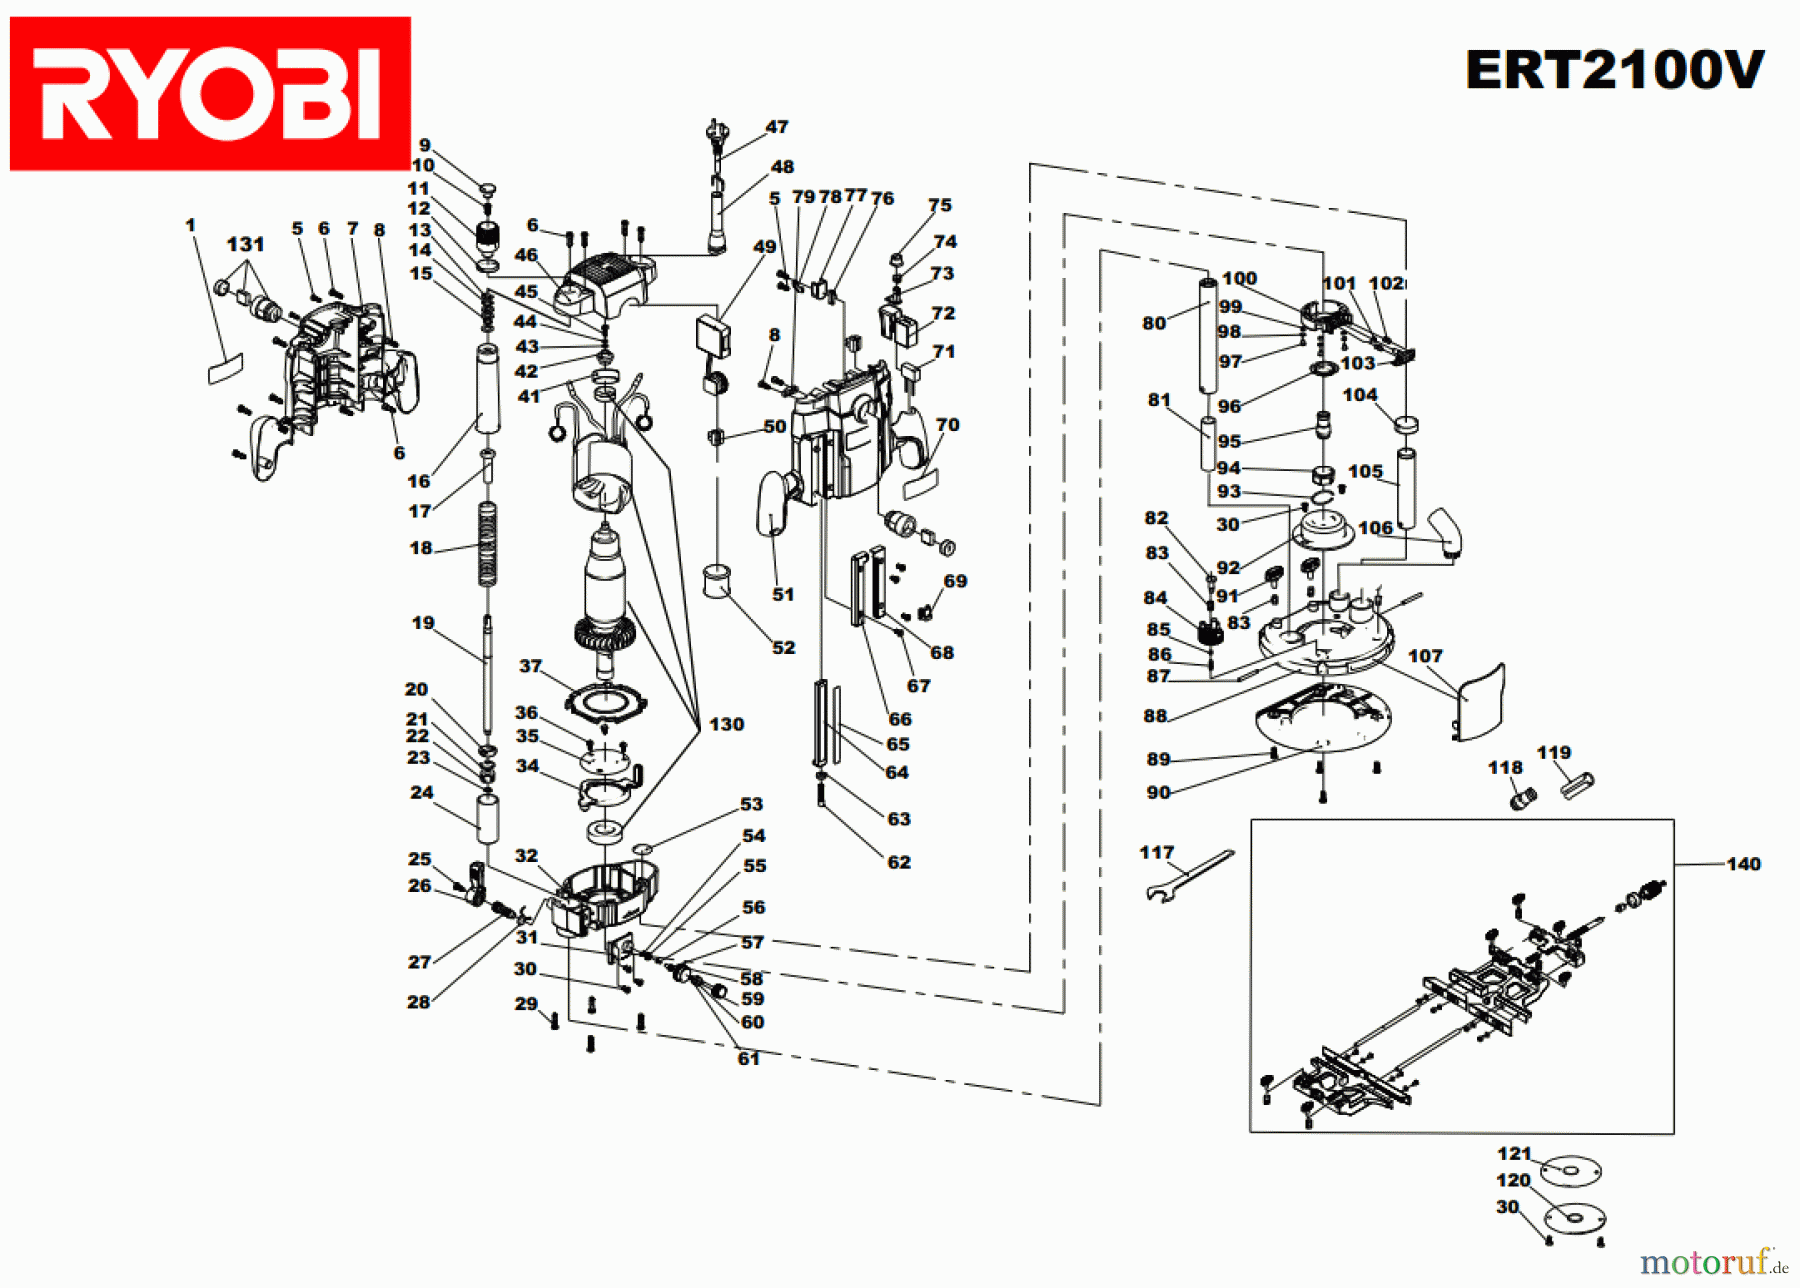  Ryobi Oberfräsen ERT2100V Seite 1